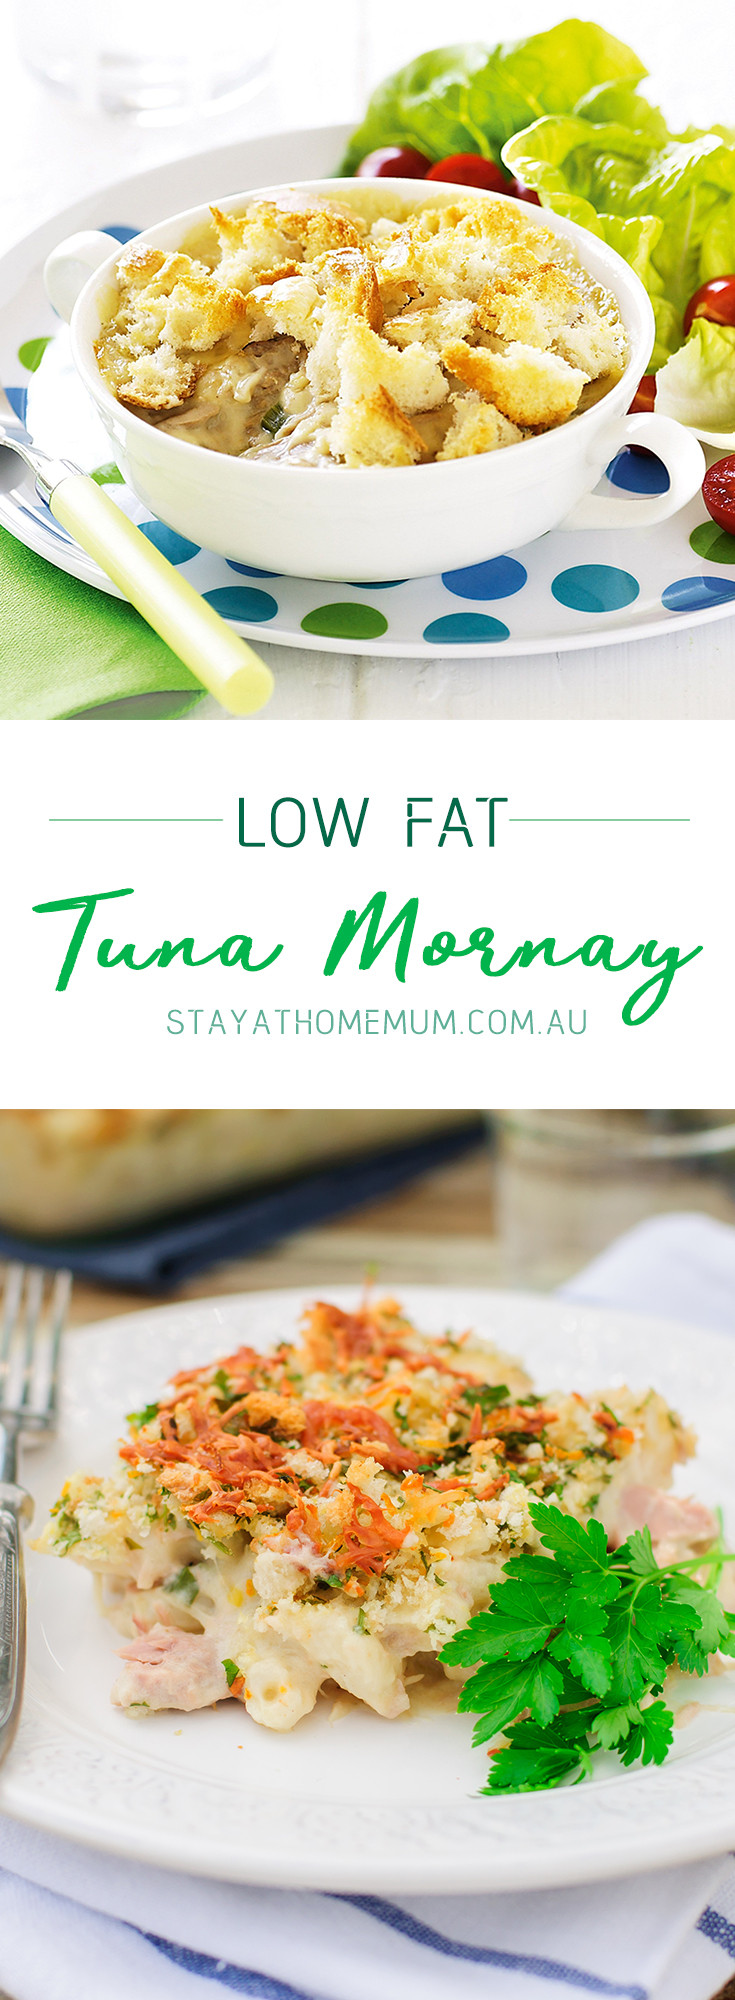 Low Calorie Tuna Recipes
 Low Fat Tuna Mornay